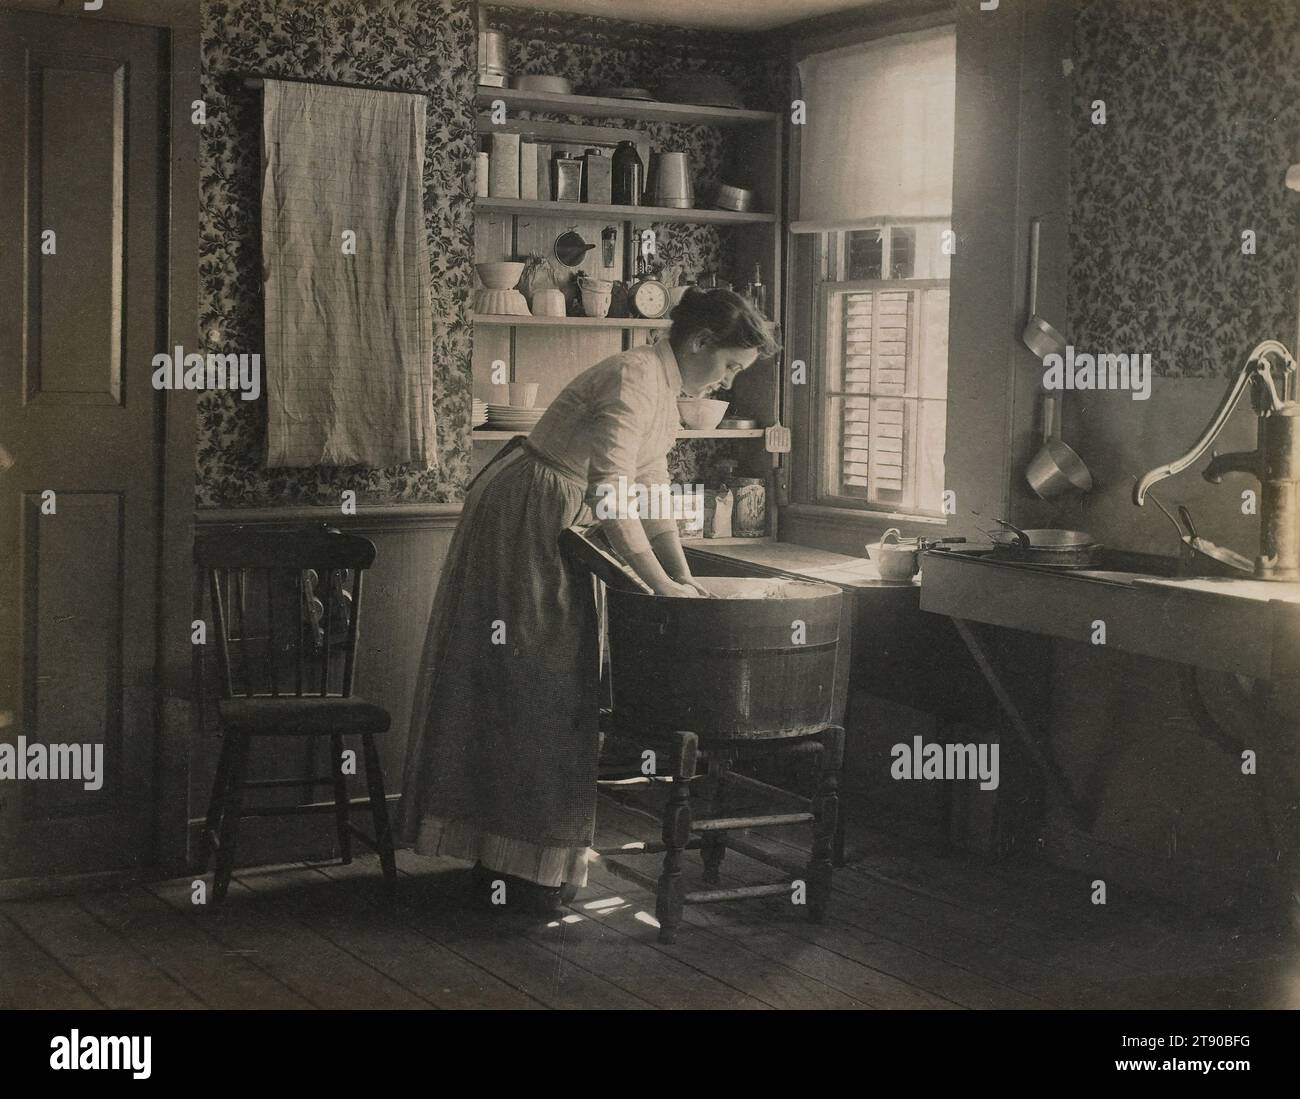 Sunny Kitchen, 19. Jahrhundert, Sarah J. Eddy, amerikanisch, 1851 - 1945, 3/16 x 15/16 Zoll (15,72 x 20,16 cm) (Bild, Blatt), Platindruck, USA, 19. Jahrhundert Stockfoto